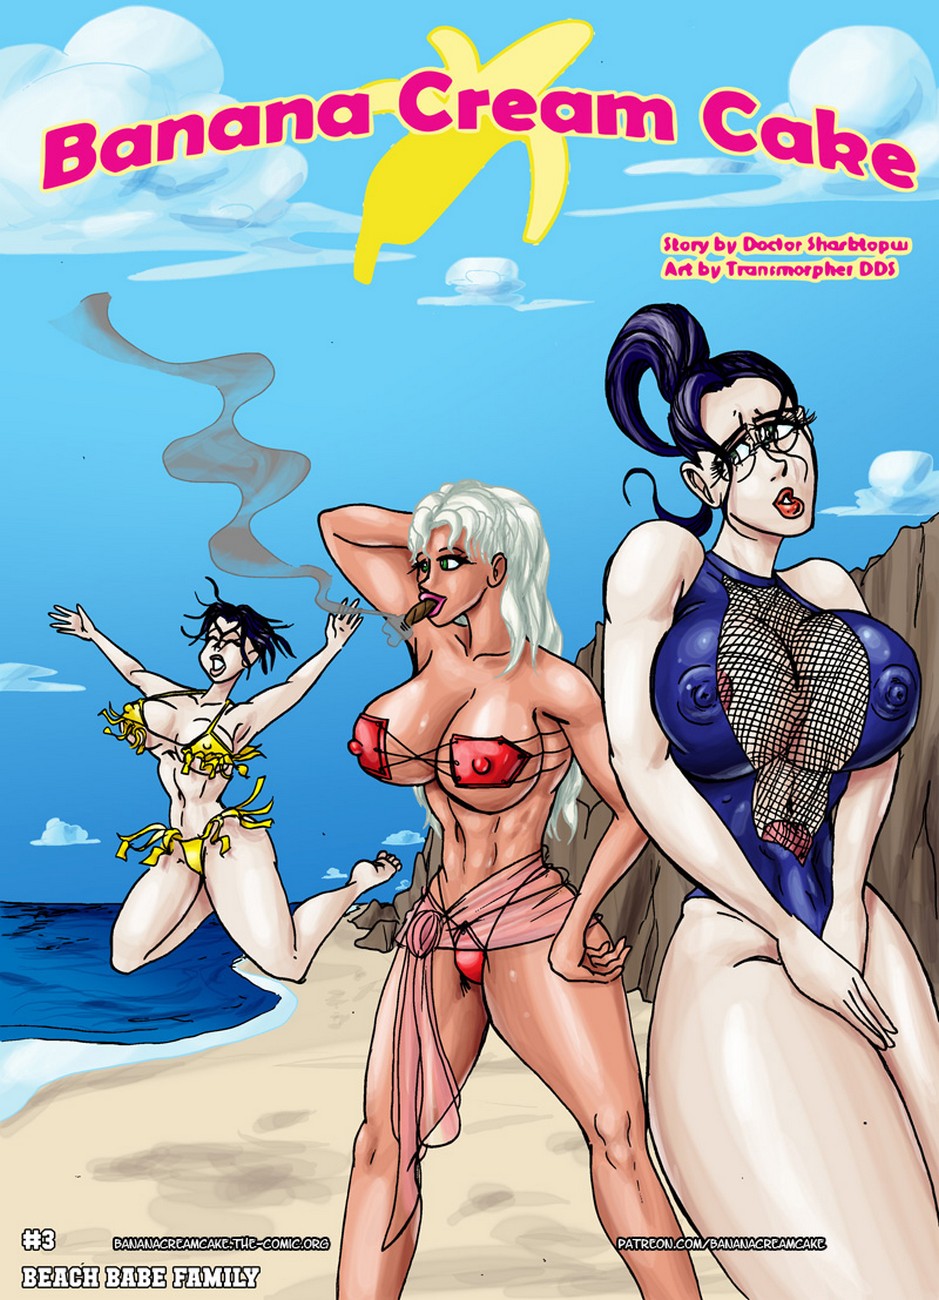 Banana Cream Cake 3 - Beach Babe Family Porn Comic on HotPornComics.com.